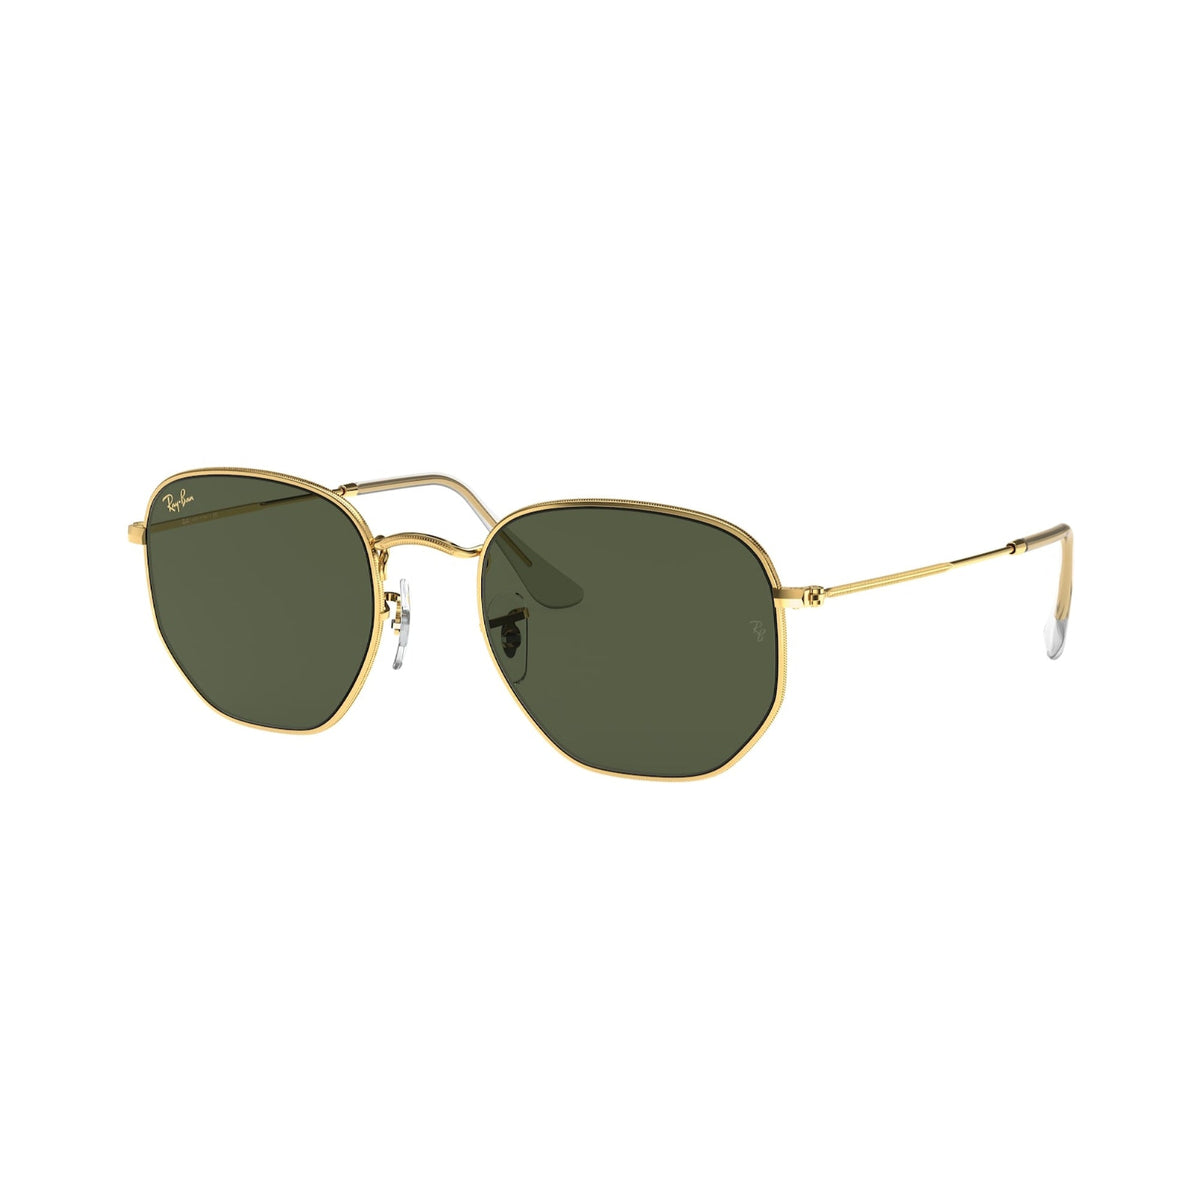 Ray-Ban Unisex Sunglasses Hexagonal Gold G-15 Green Metal Metal  0RB3548 919631 51